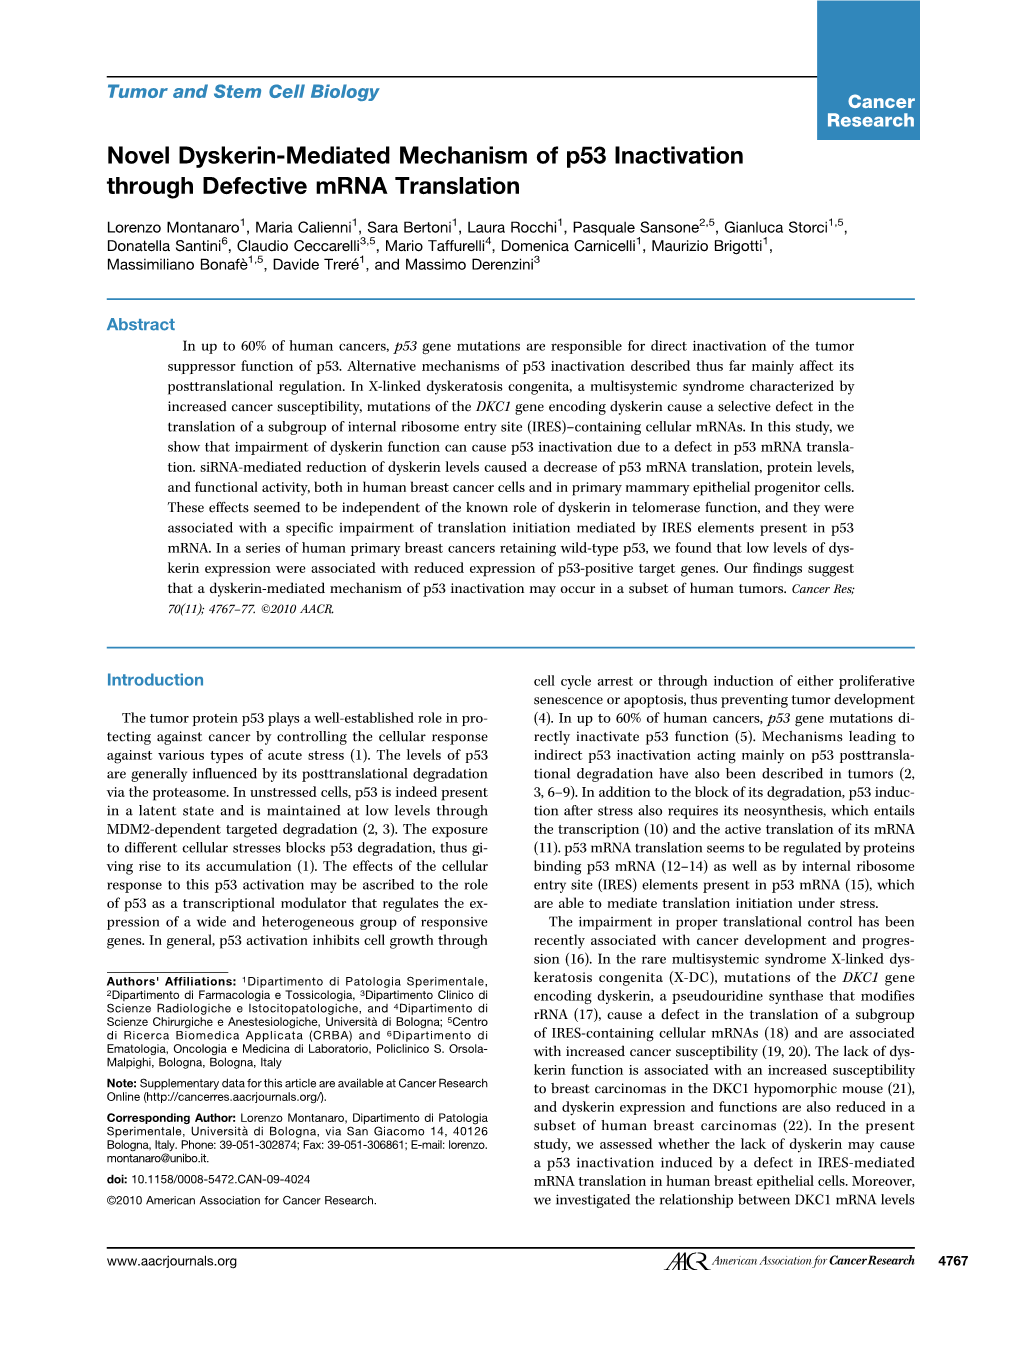 Novel Dyskerin-Mediated Mechanism of P53 Inactivation Through Defective Mrna Translation